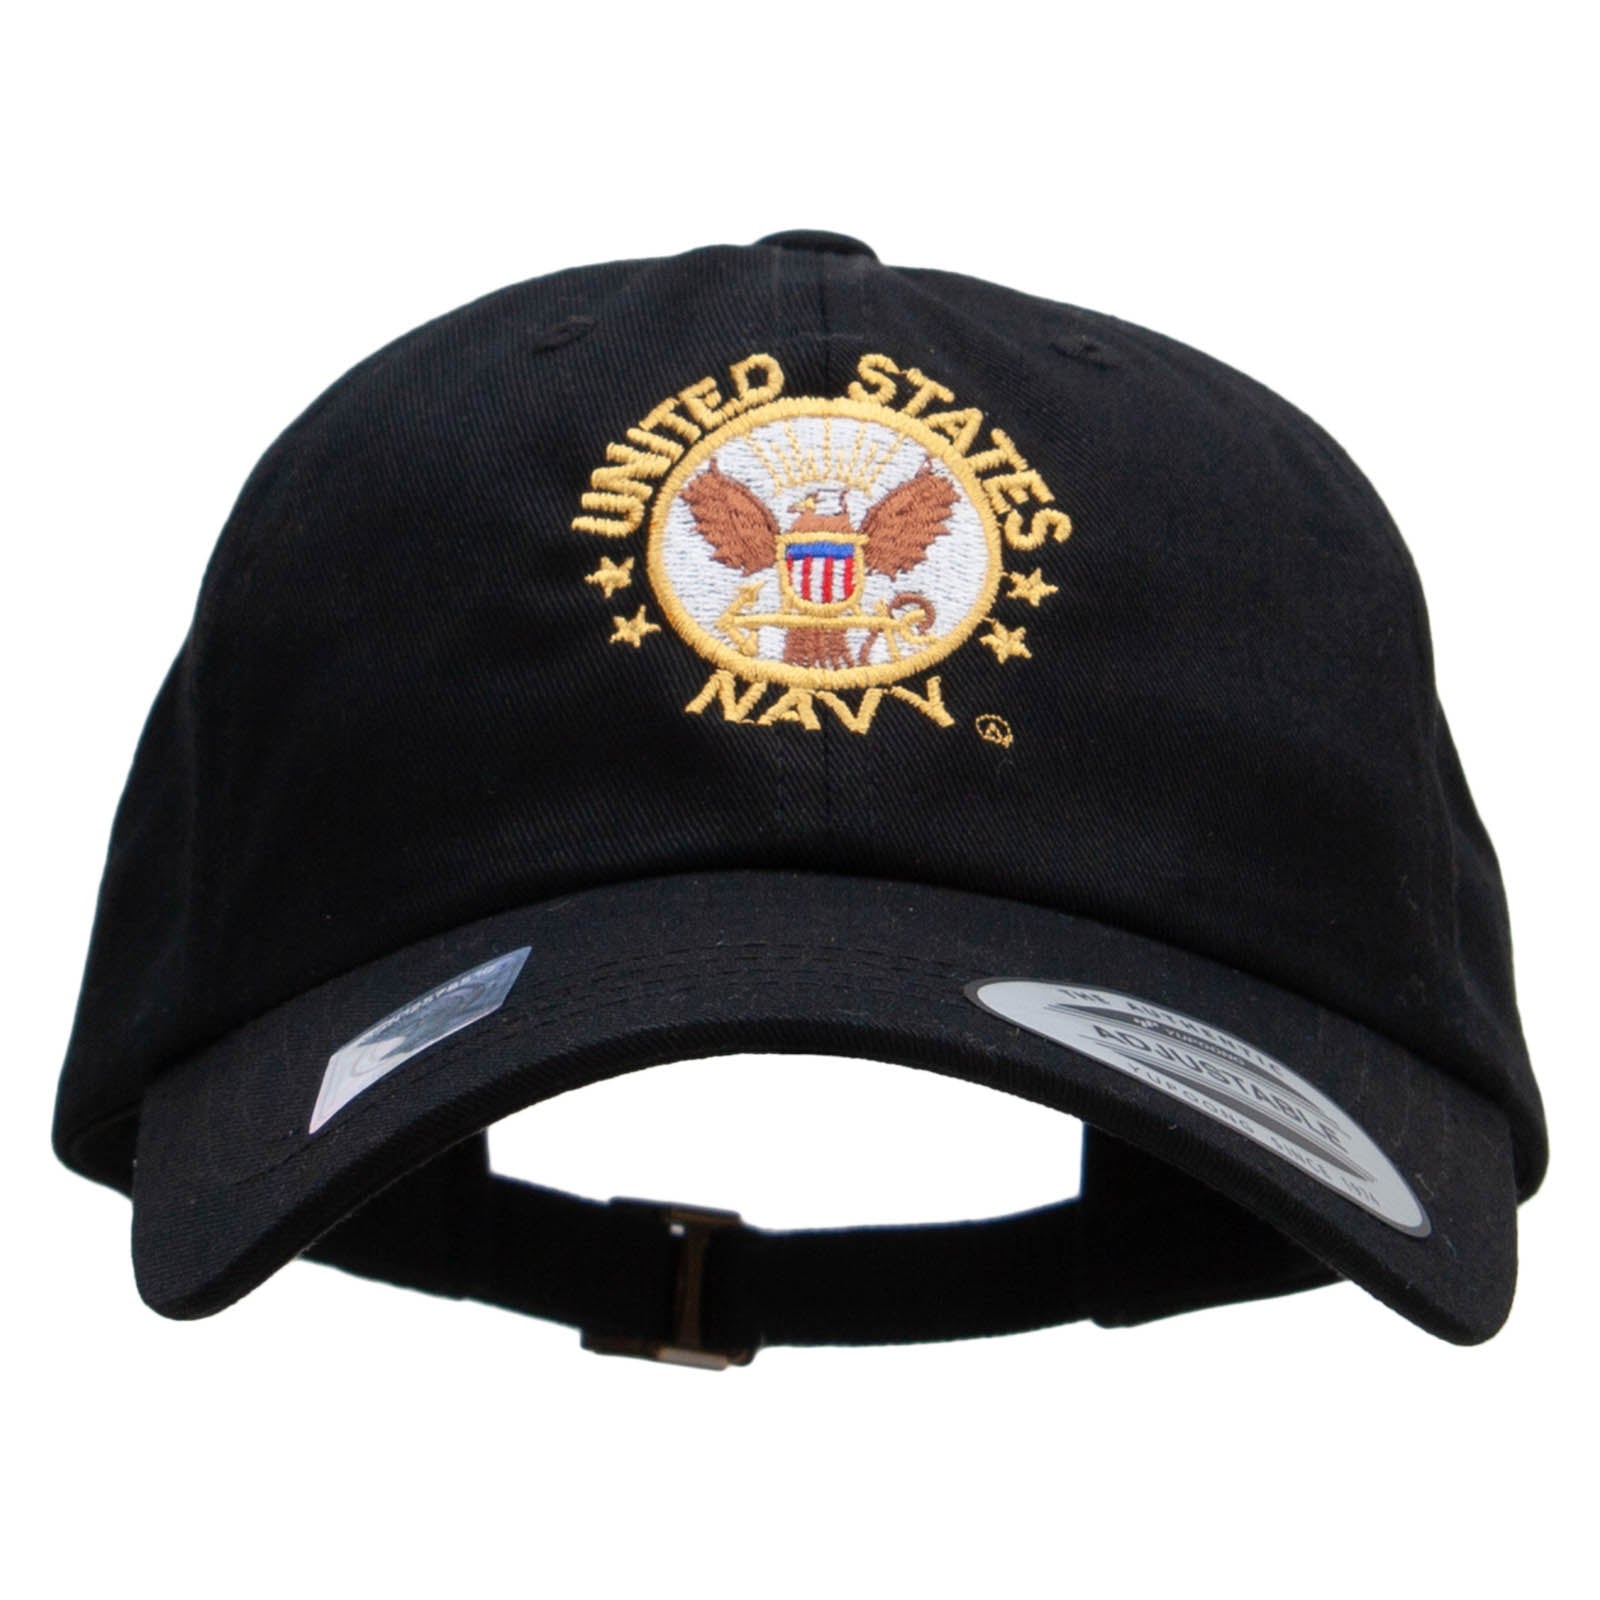 Licensed United States Navy Circle Emblem Unstructured Low Profile 6 panel Cotton Cap - Black OSFM